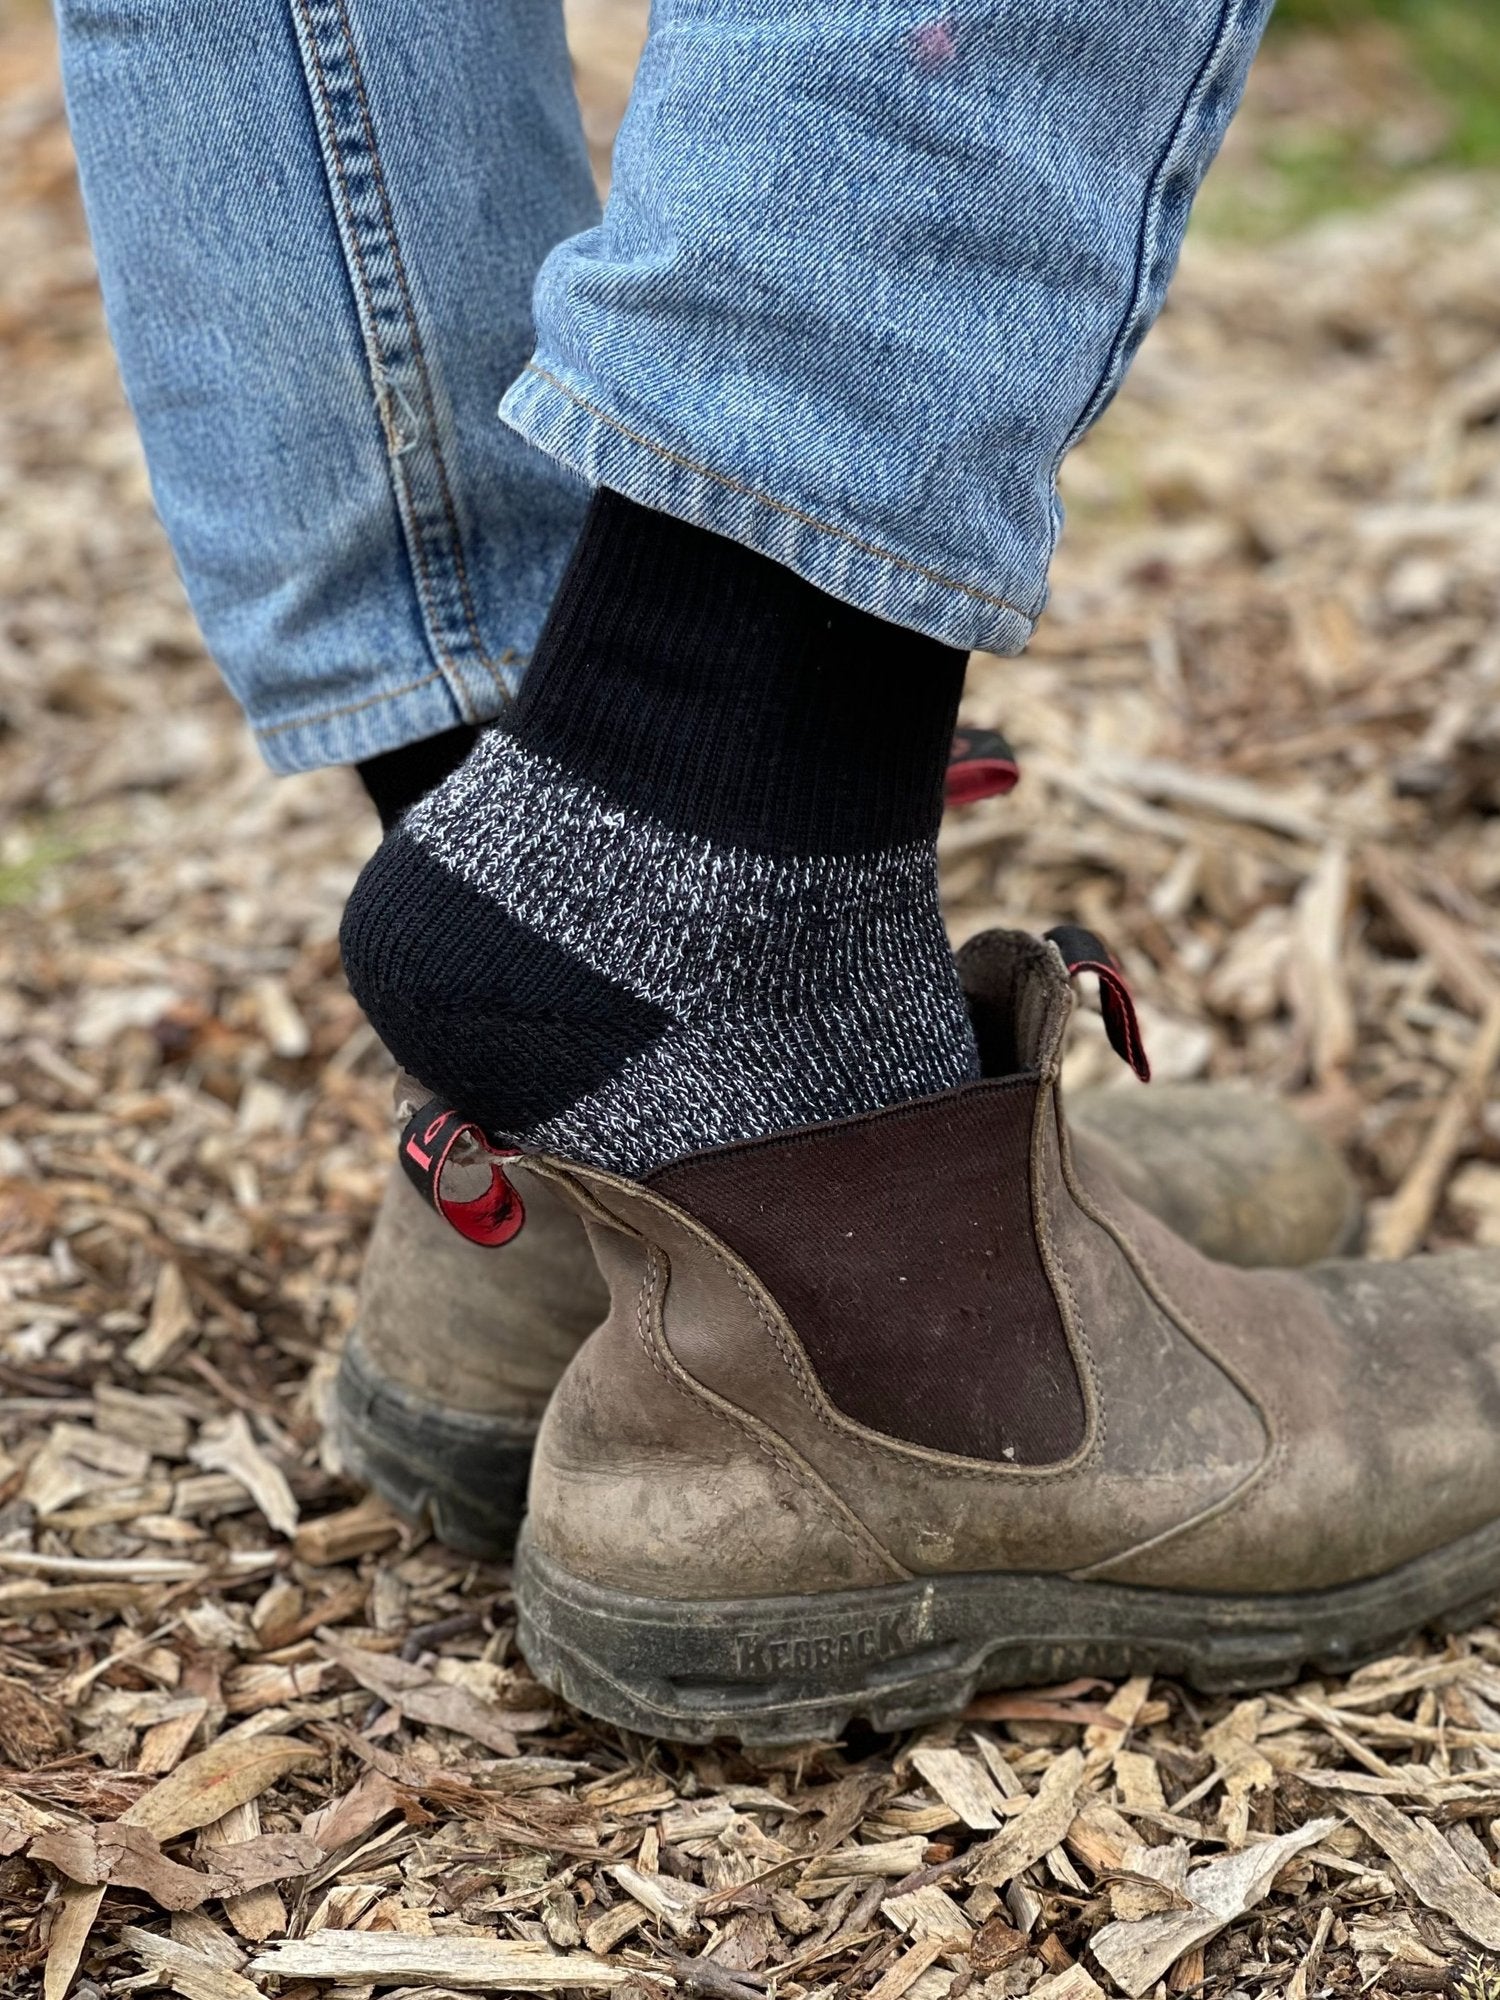 Merino Wool Hiking Socks with Coolmax in Black - Aussie Made - The Sockery